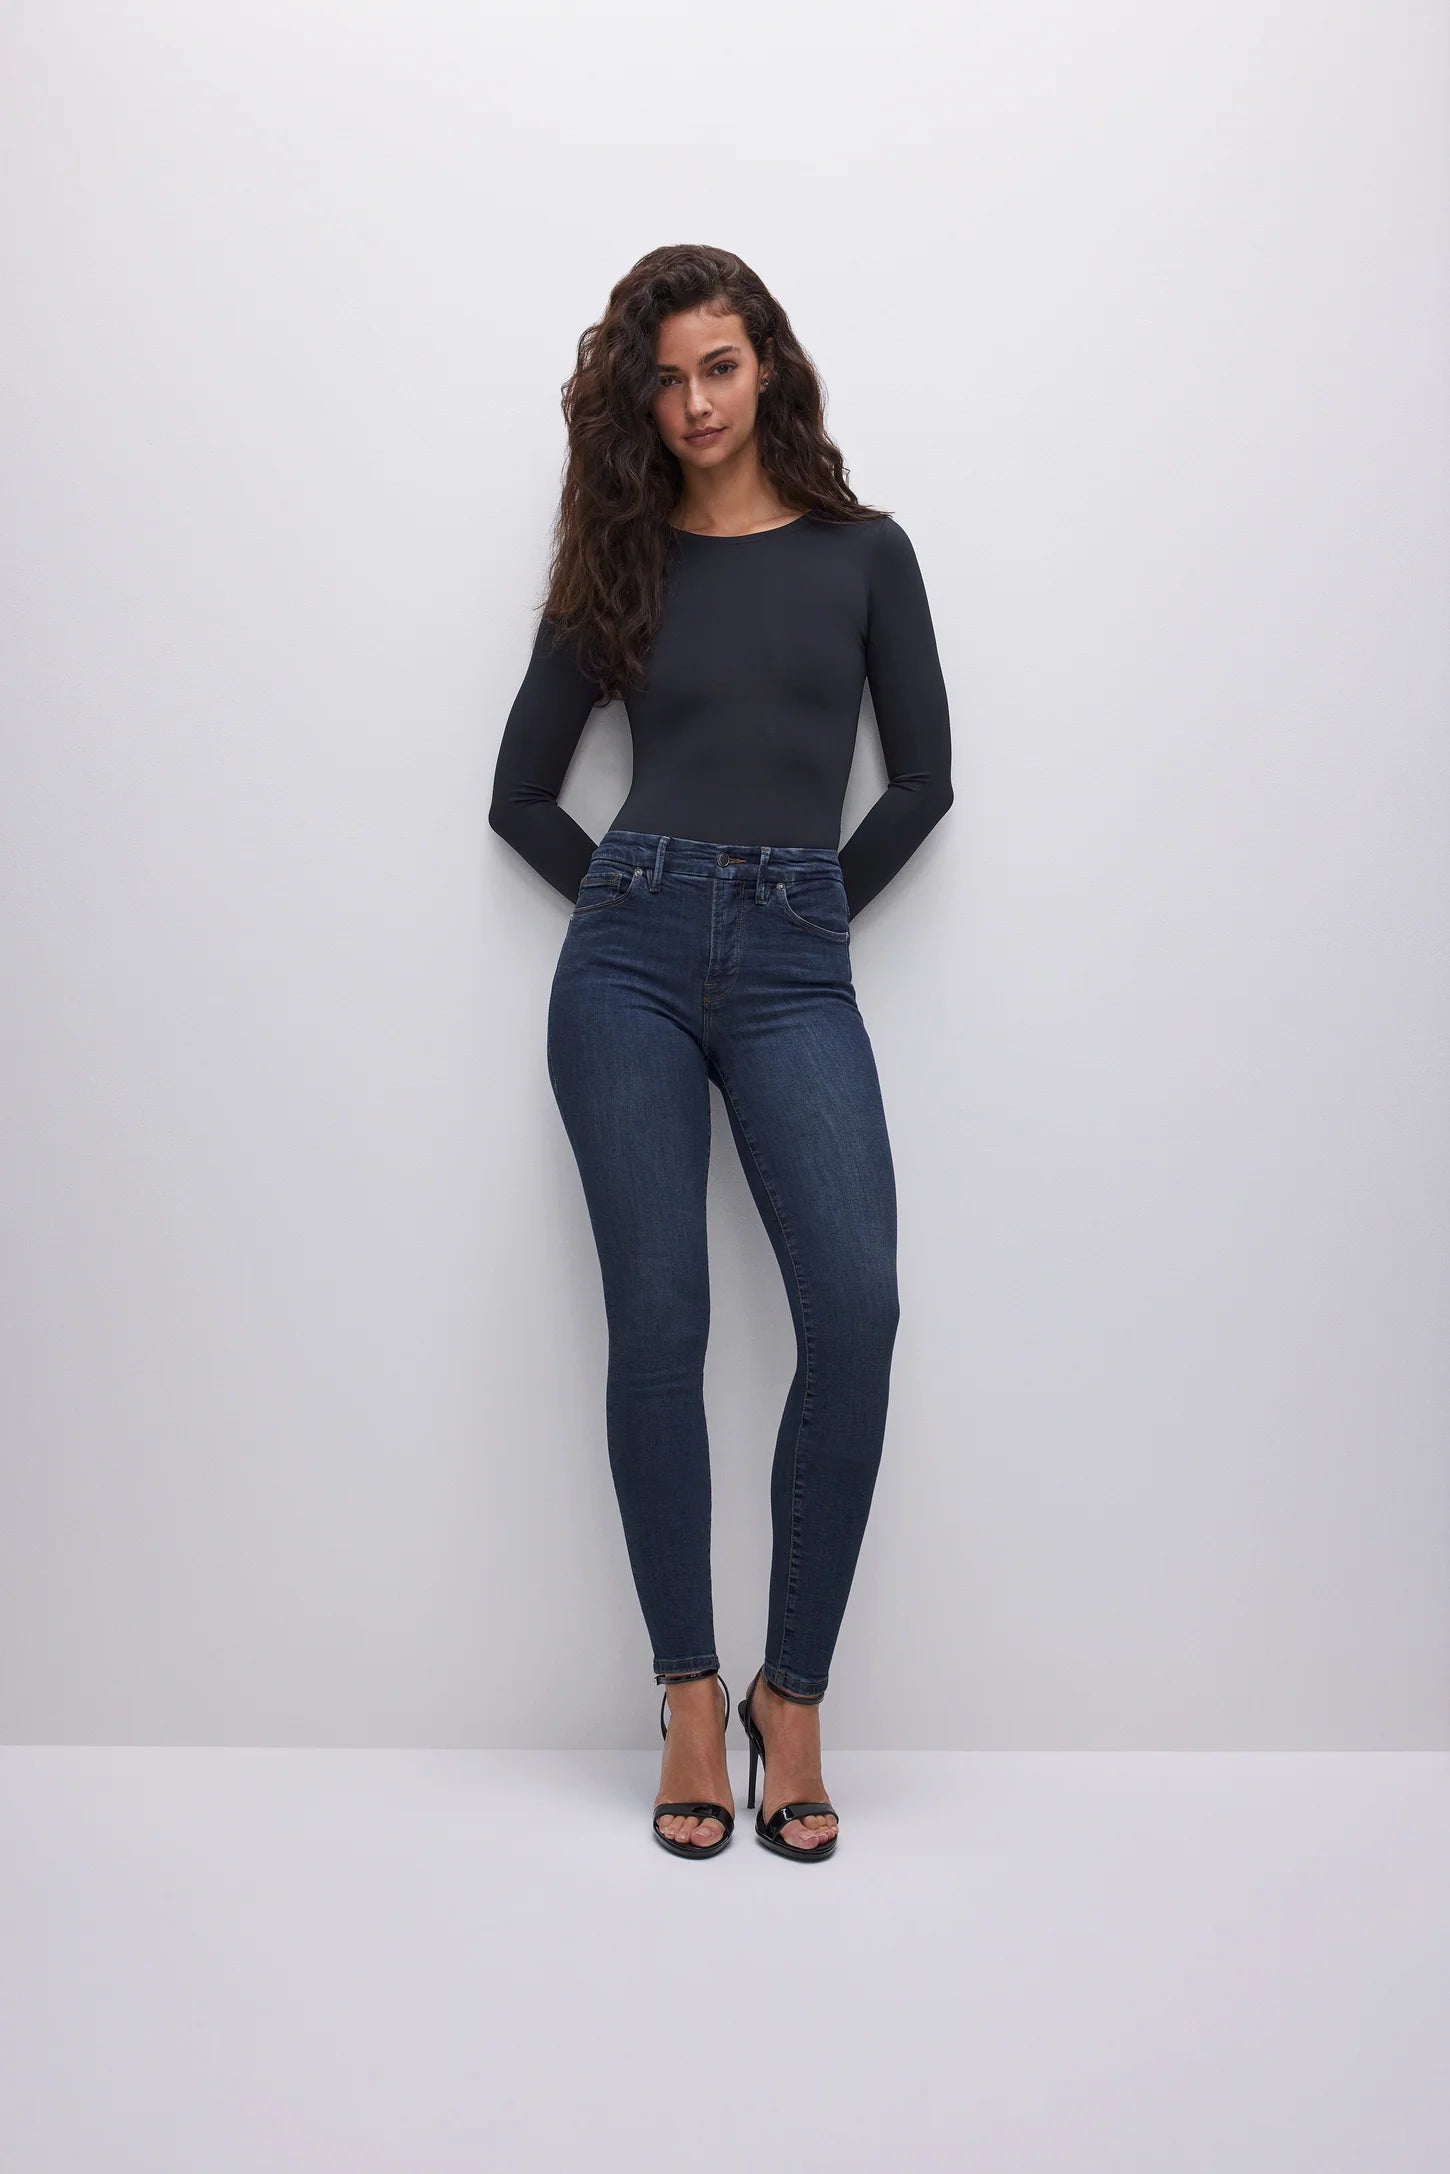 17 Stretch Jeans For Women That Feel Like Leggings - Starting at